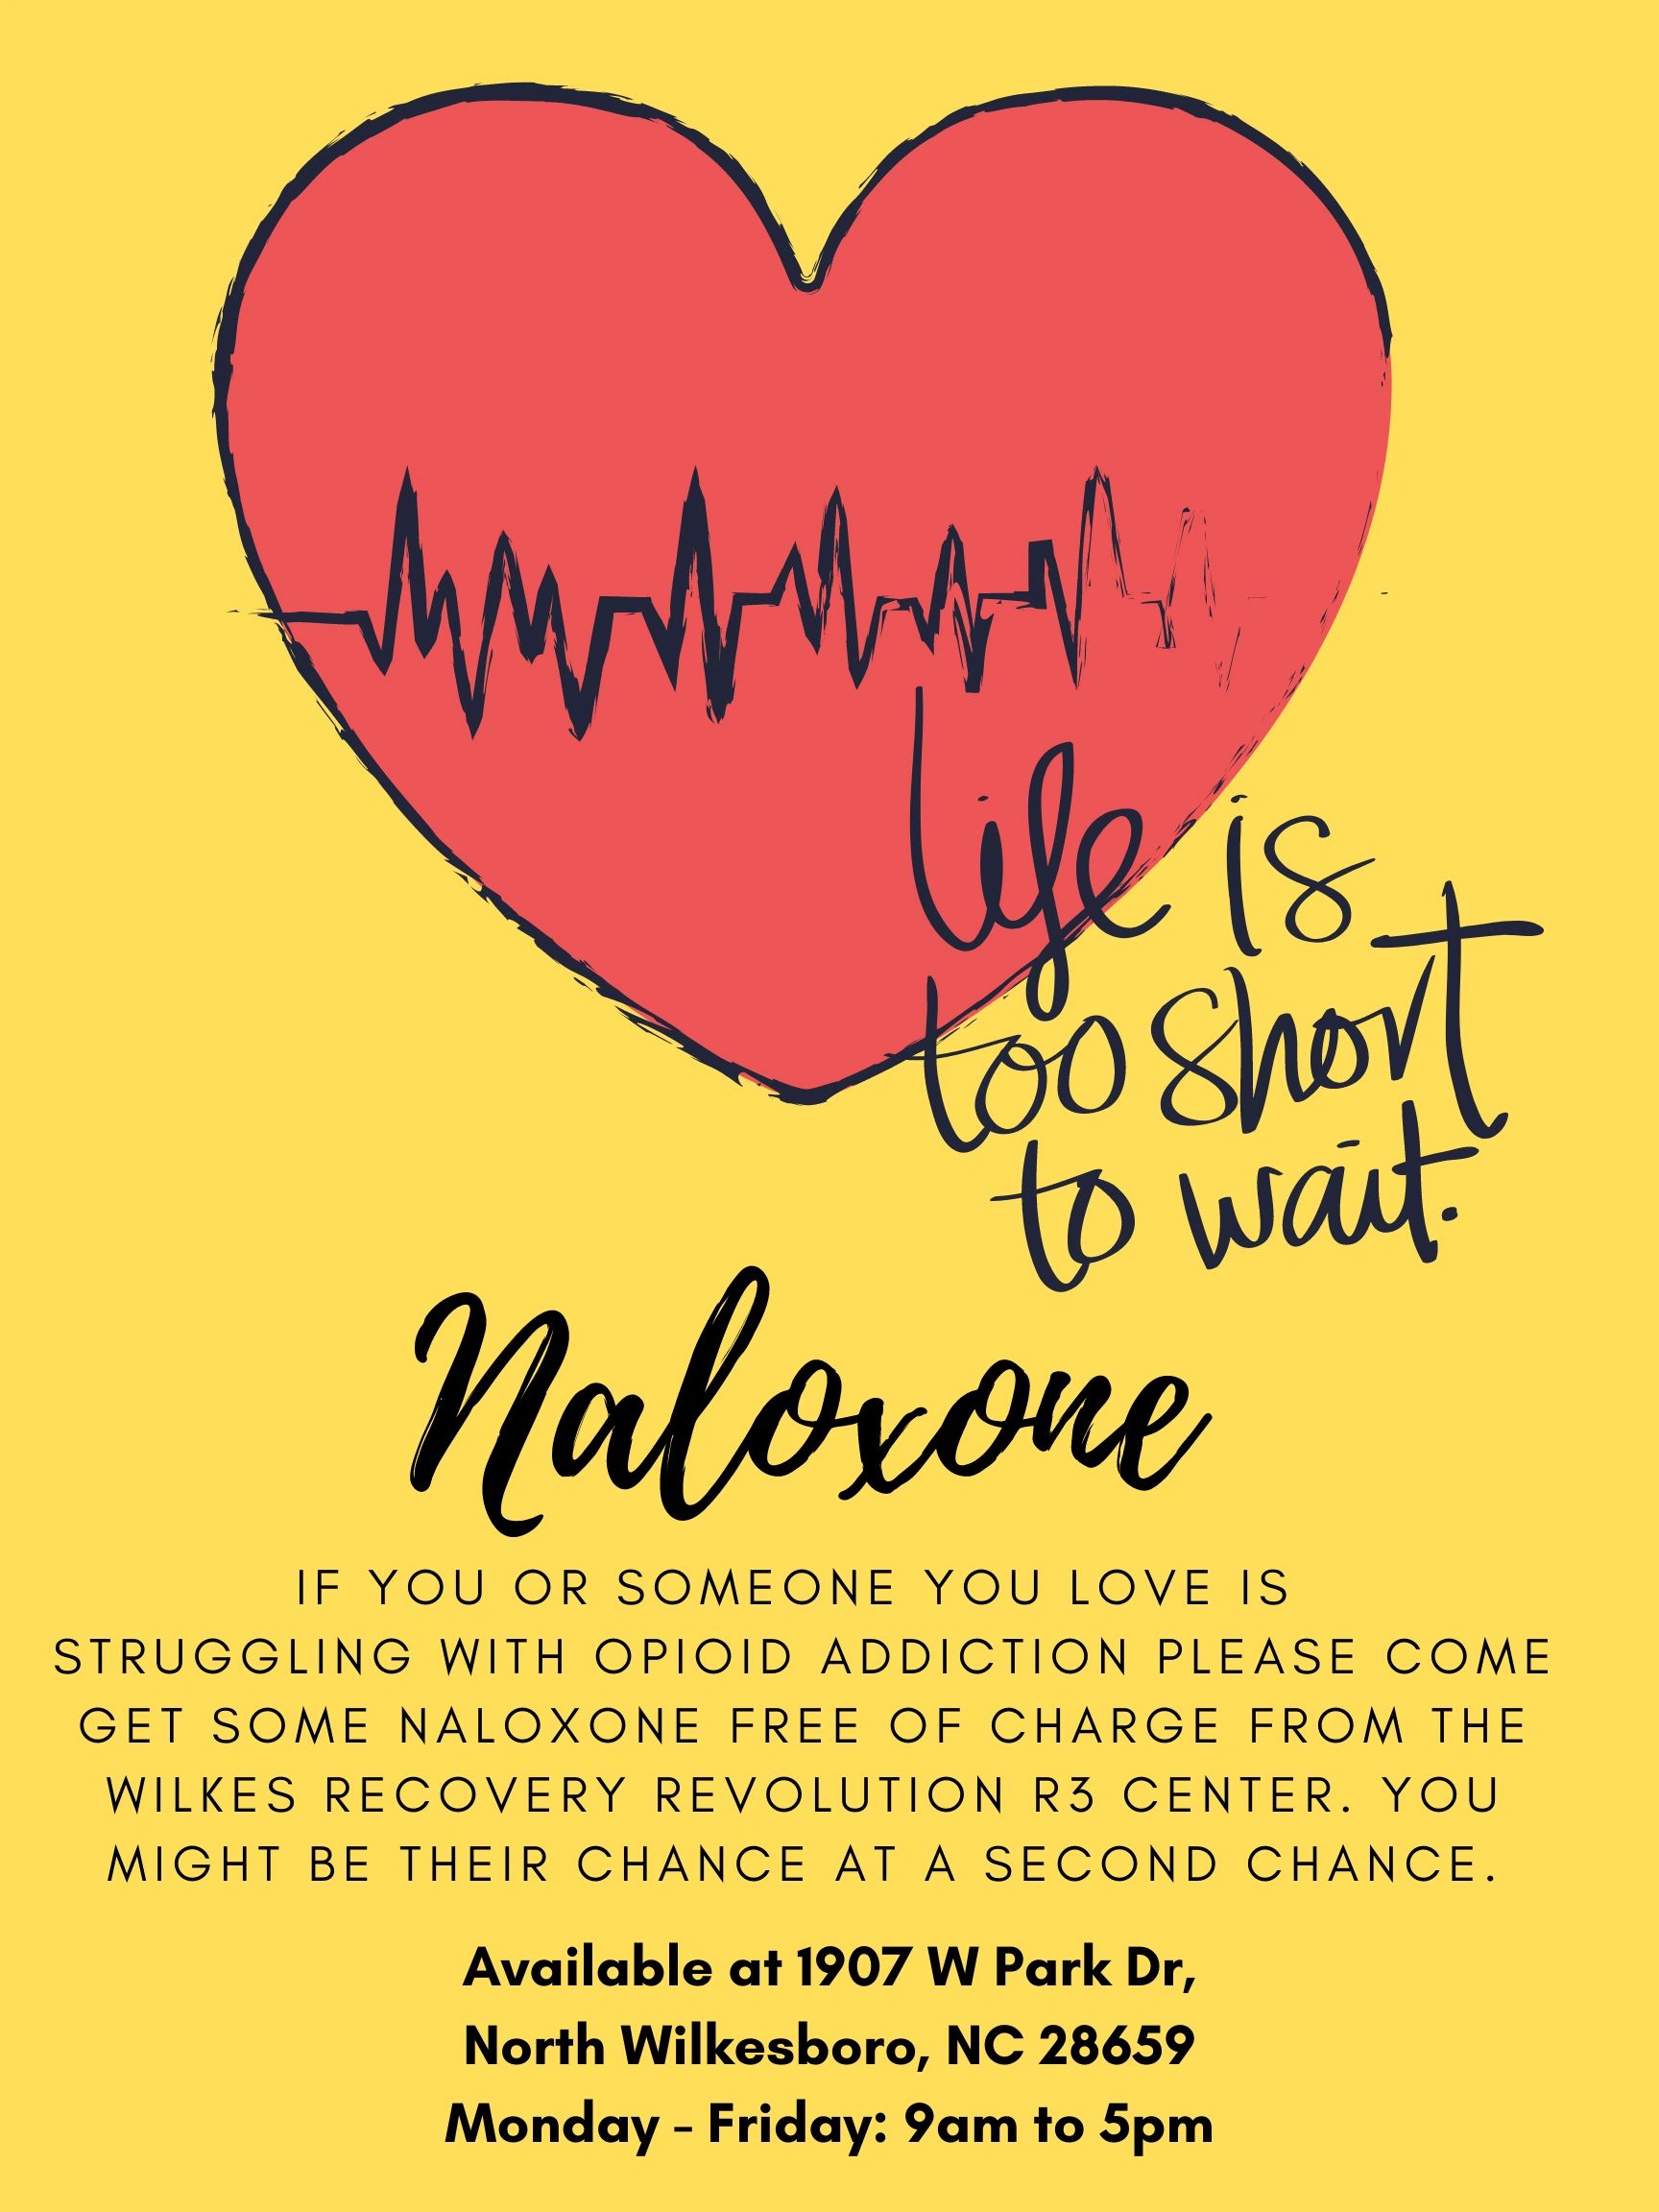 Free Naloxone kits for those struggling with opioid addiction